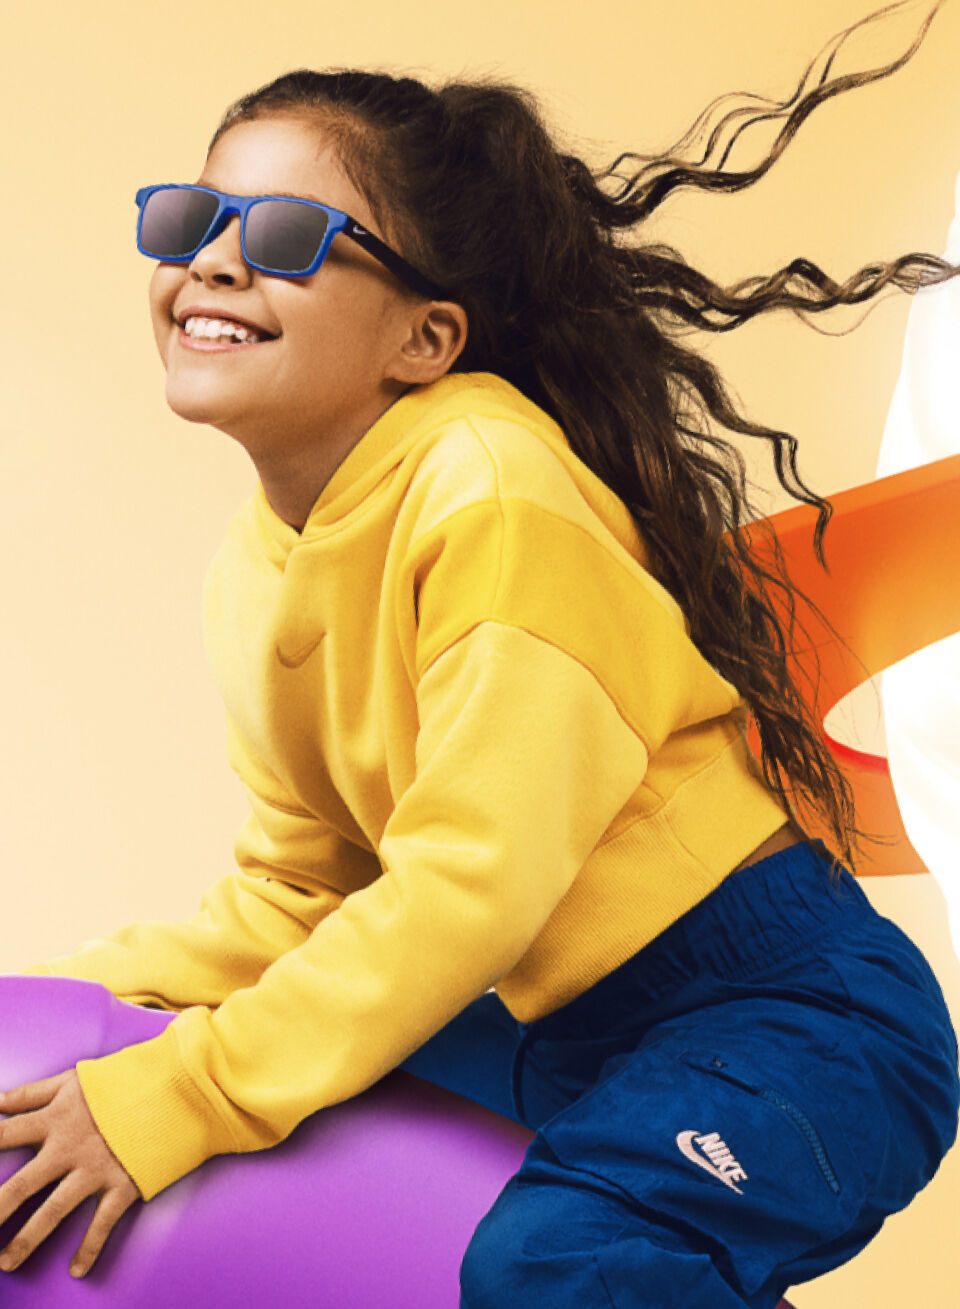 Kids sunglasses 2023 mobile